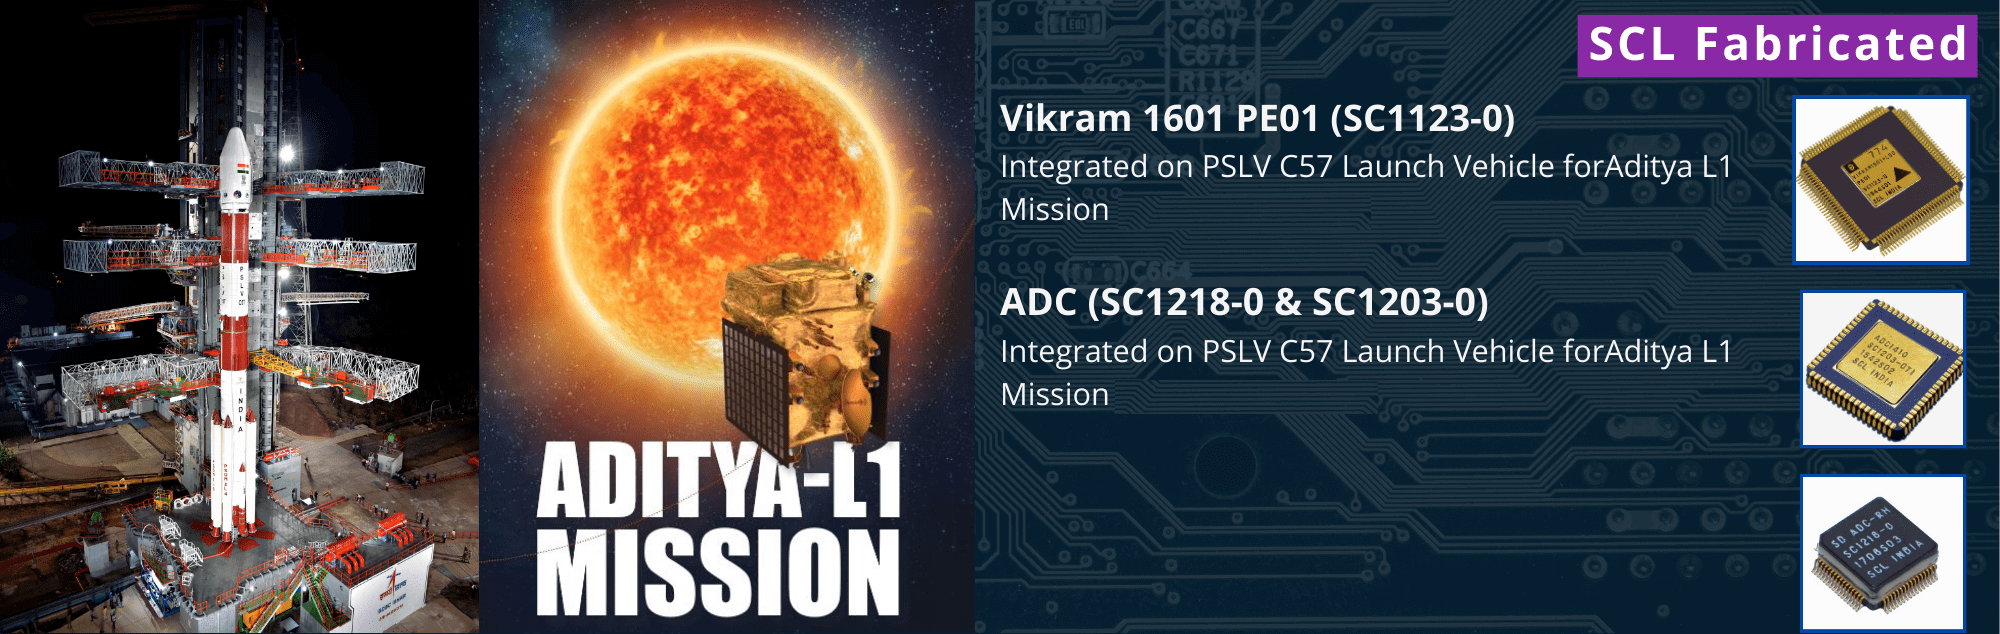 Aditya L1 Mission-ADC